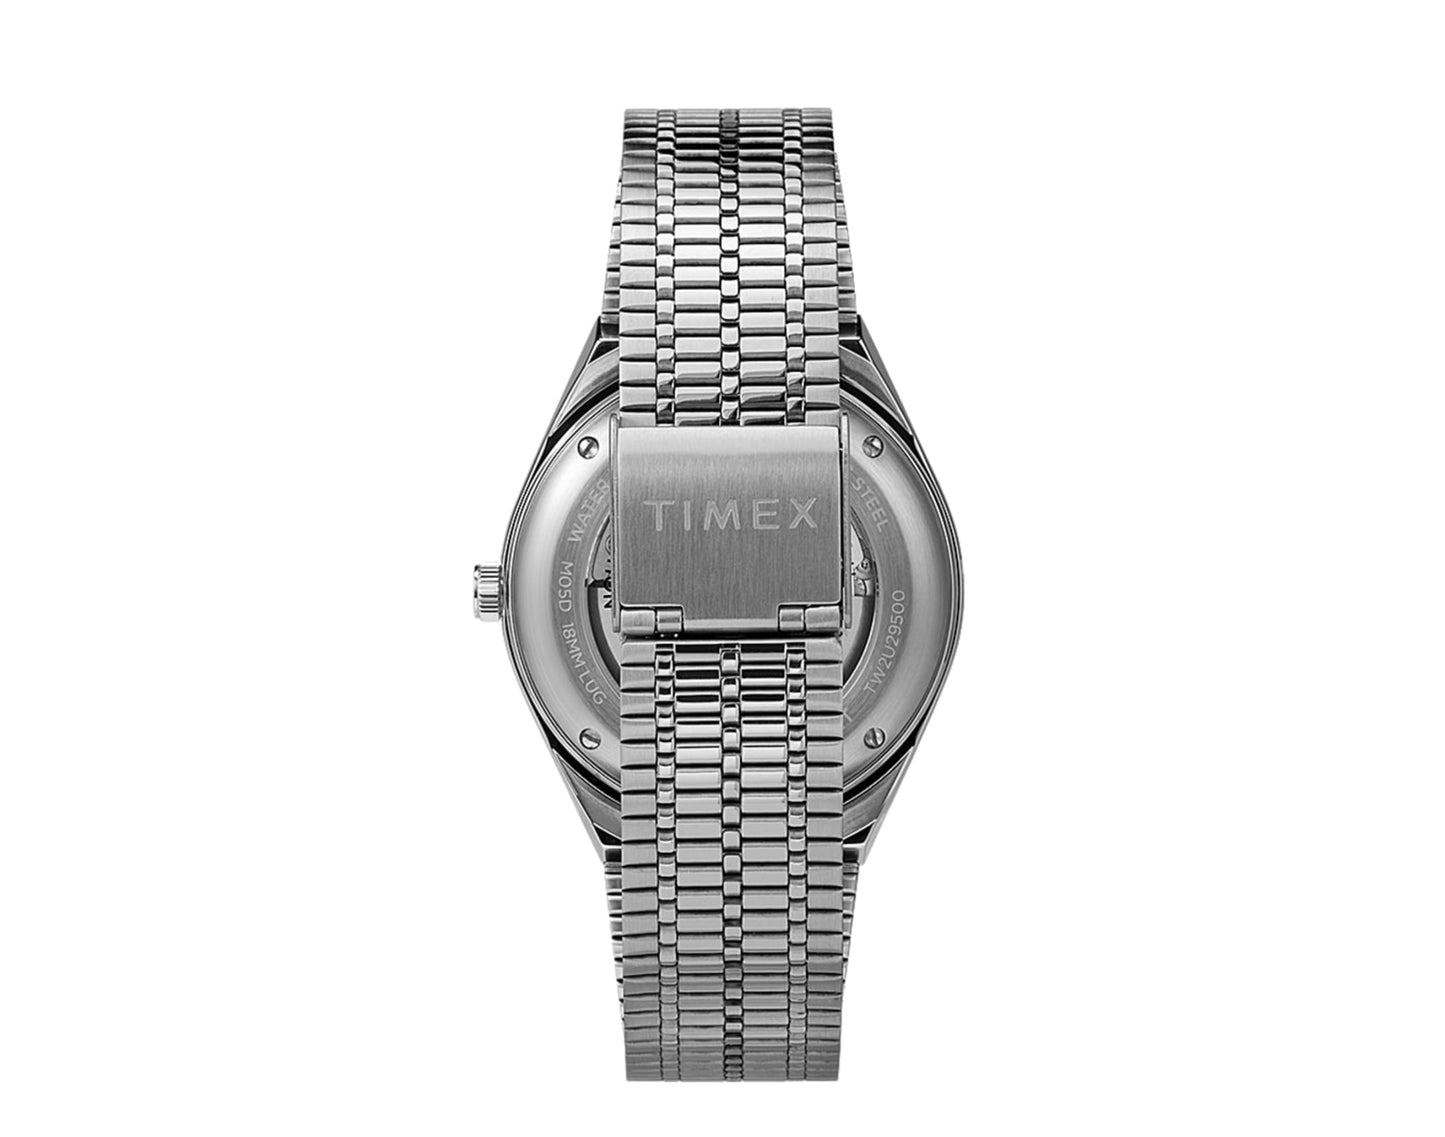 Timex Q M79 Automatic 40mm Stainless Steel Bracelet Black/Black Watch TW2U78300ZV